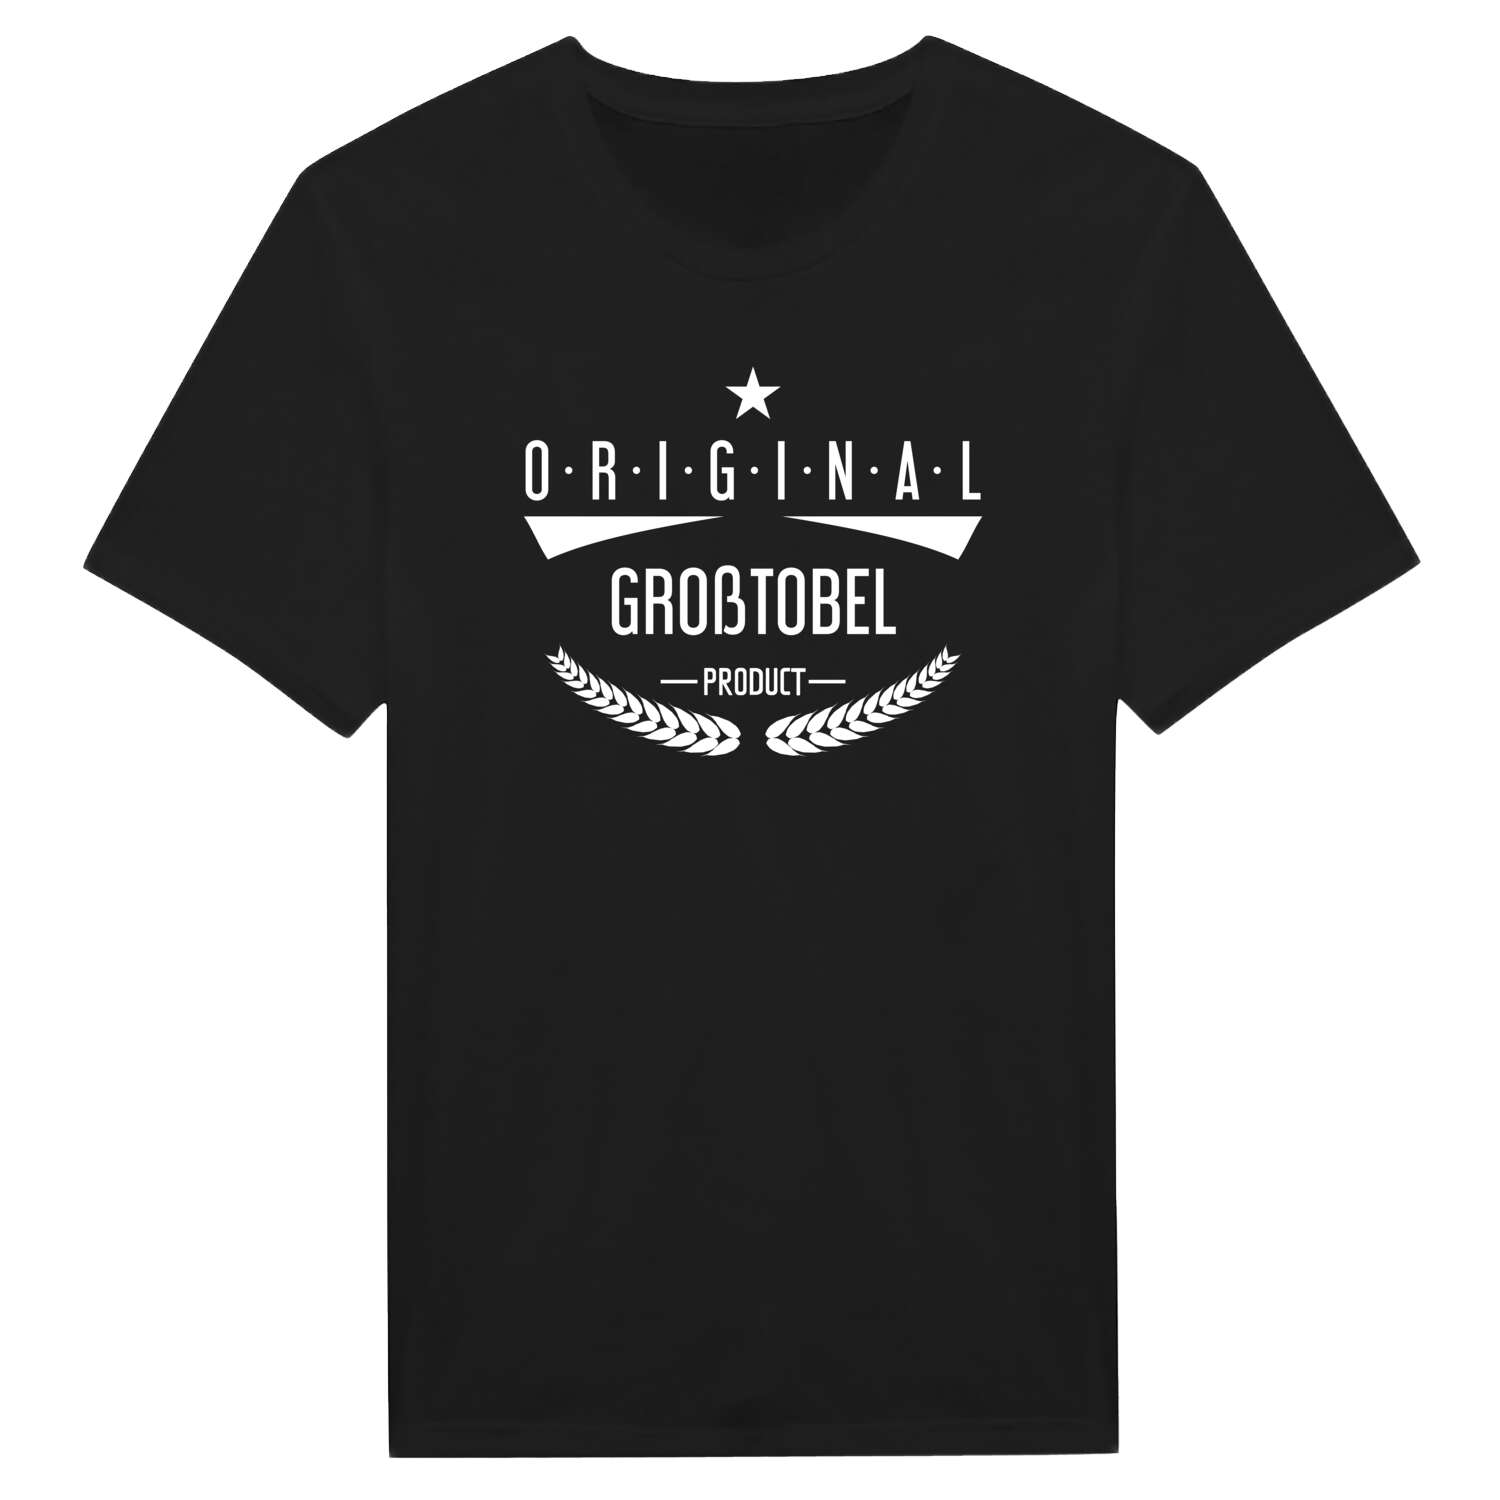 Großtobel T-Shirt »Original Product«